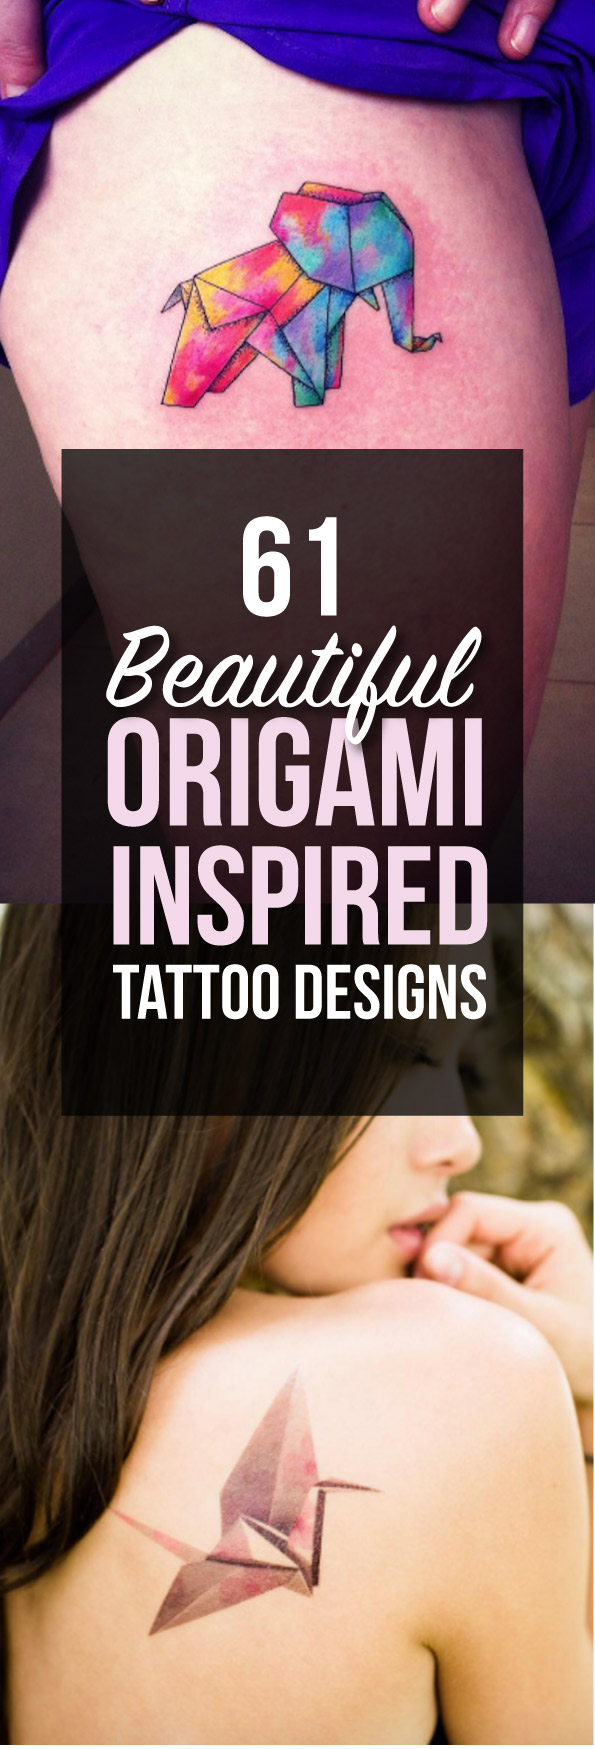 61 Beautiful Origami Inspired Tattoo Designs | TattooBlend